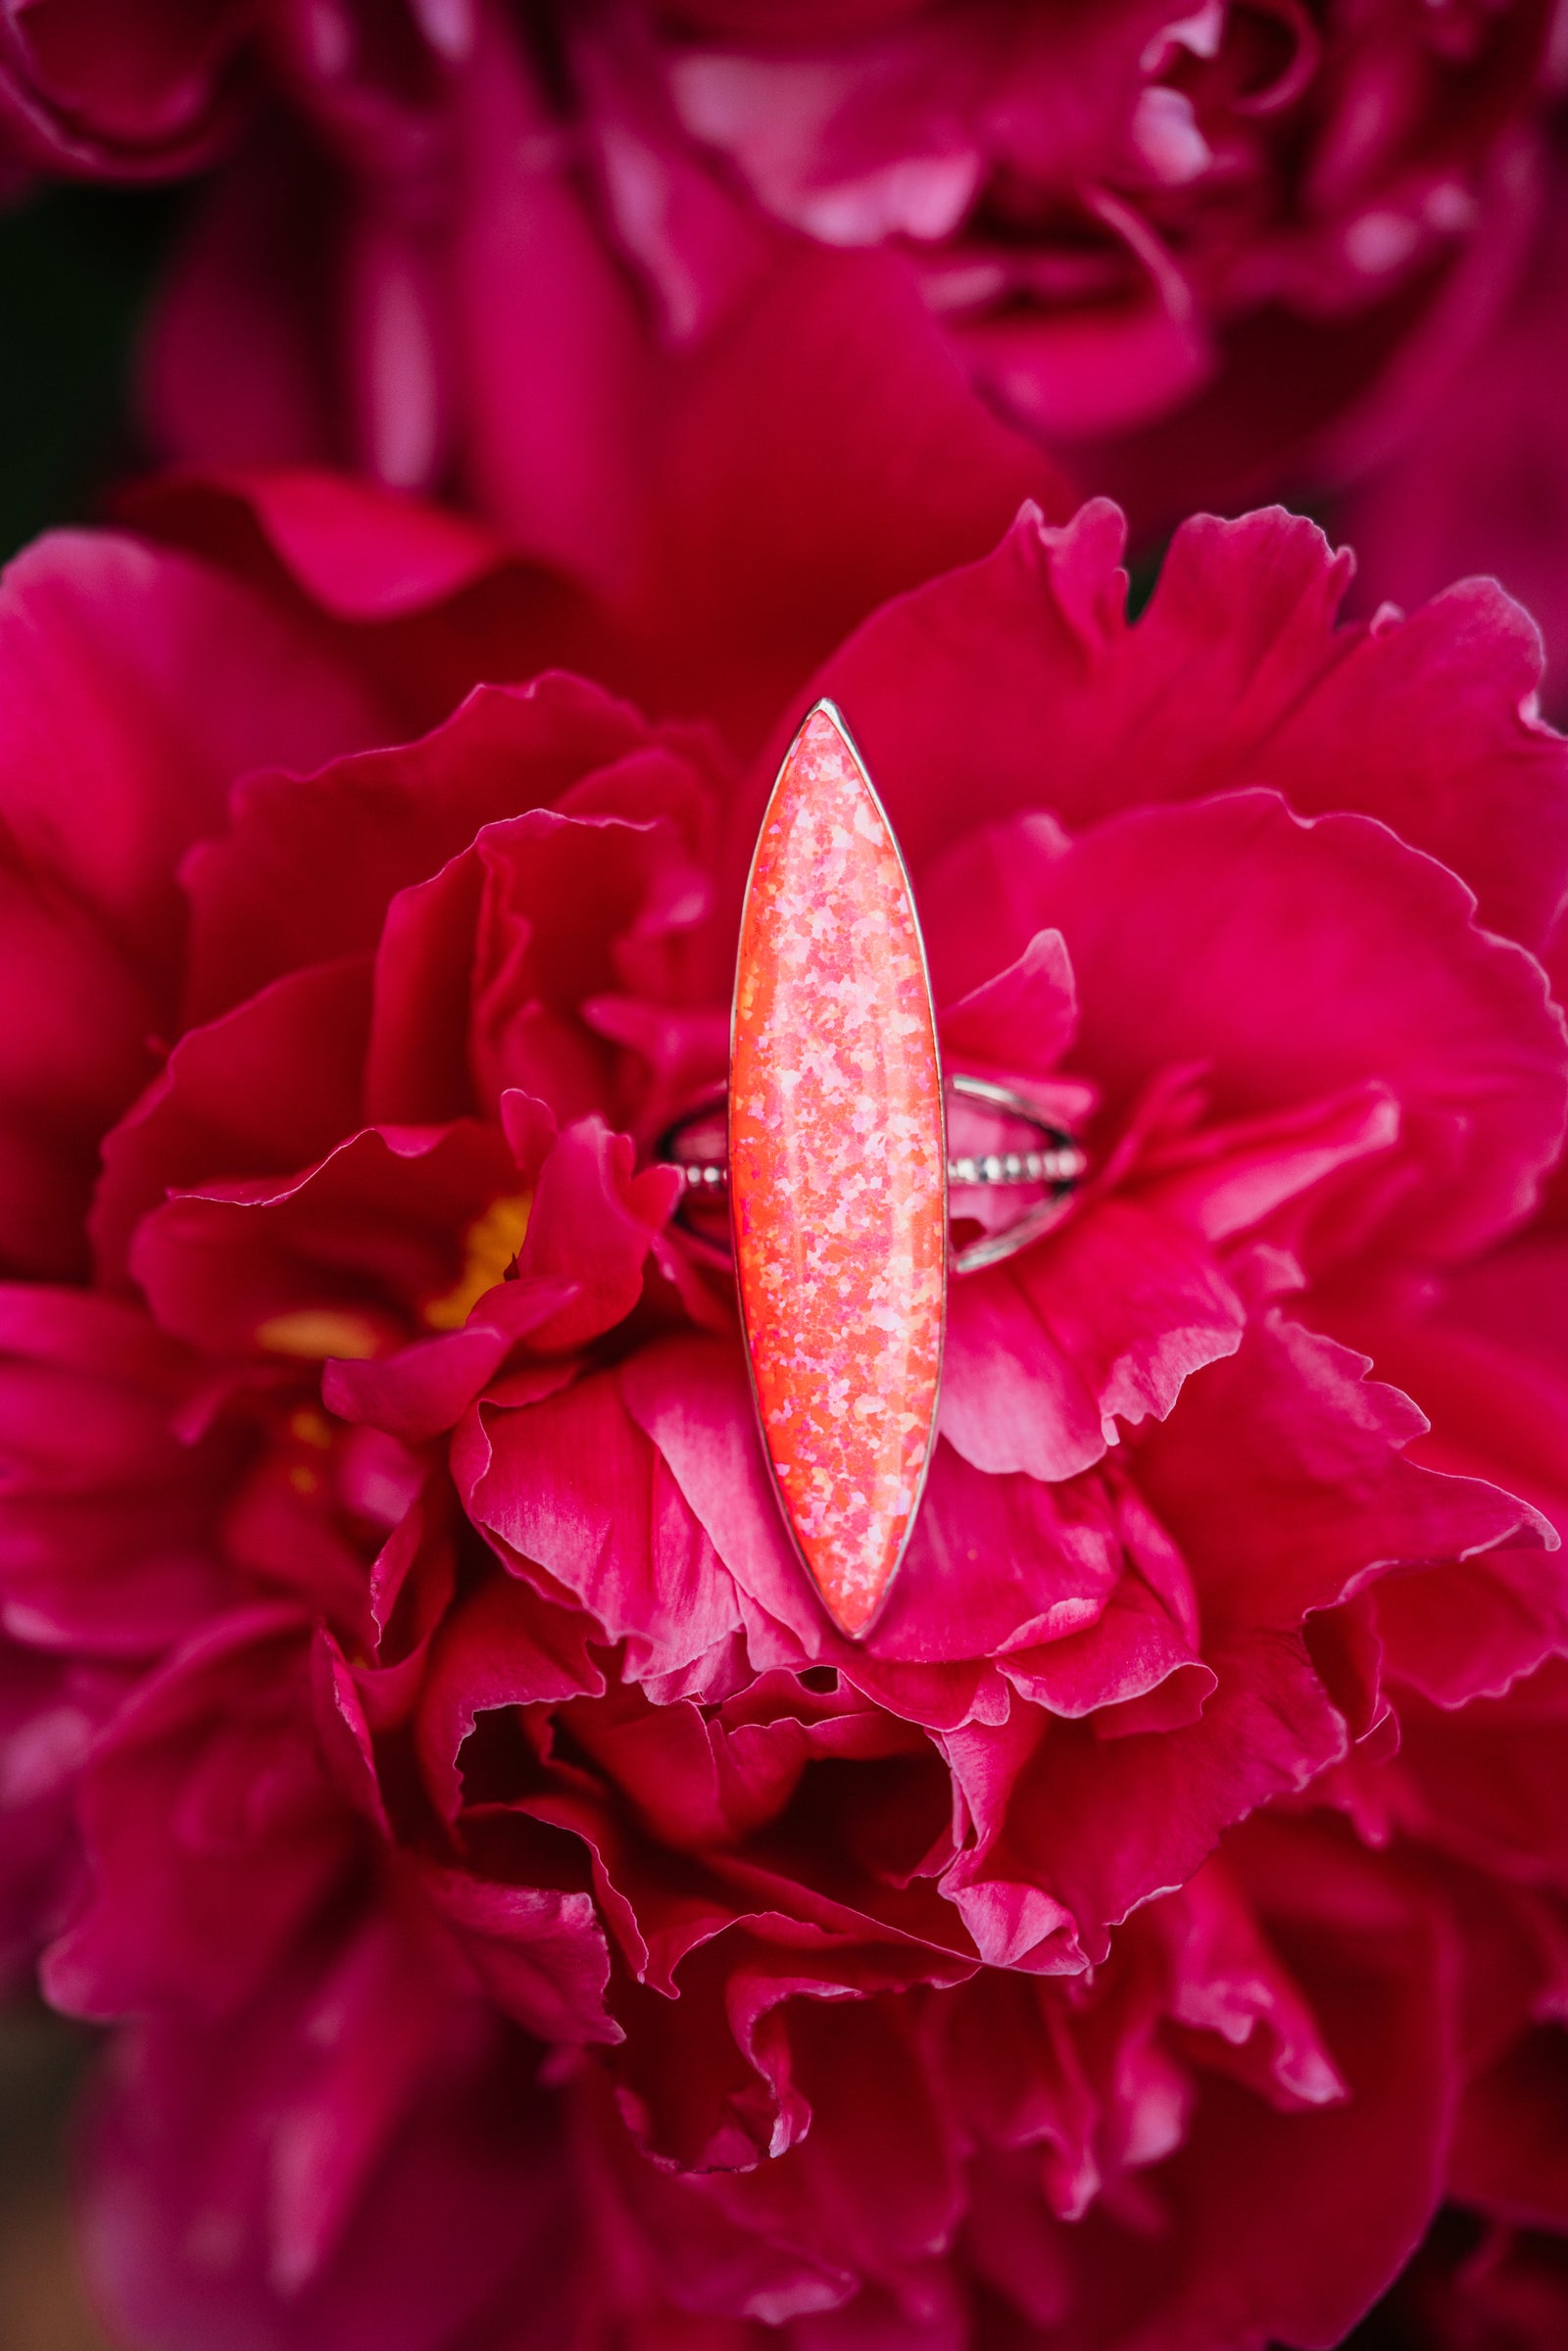 Poppy Ring | Pink Opal